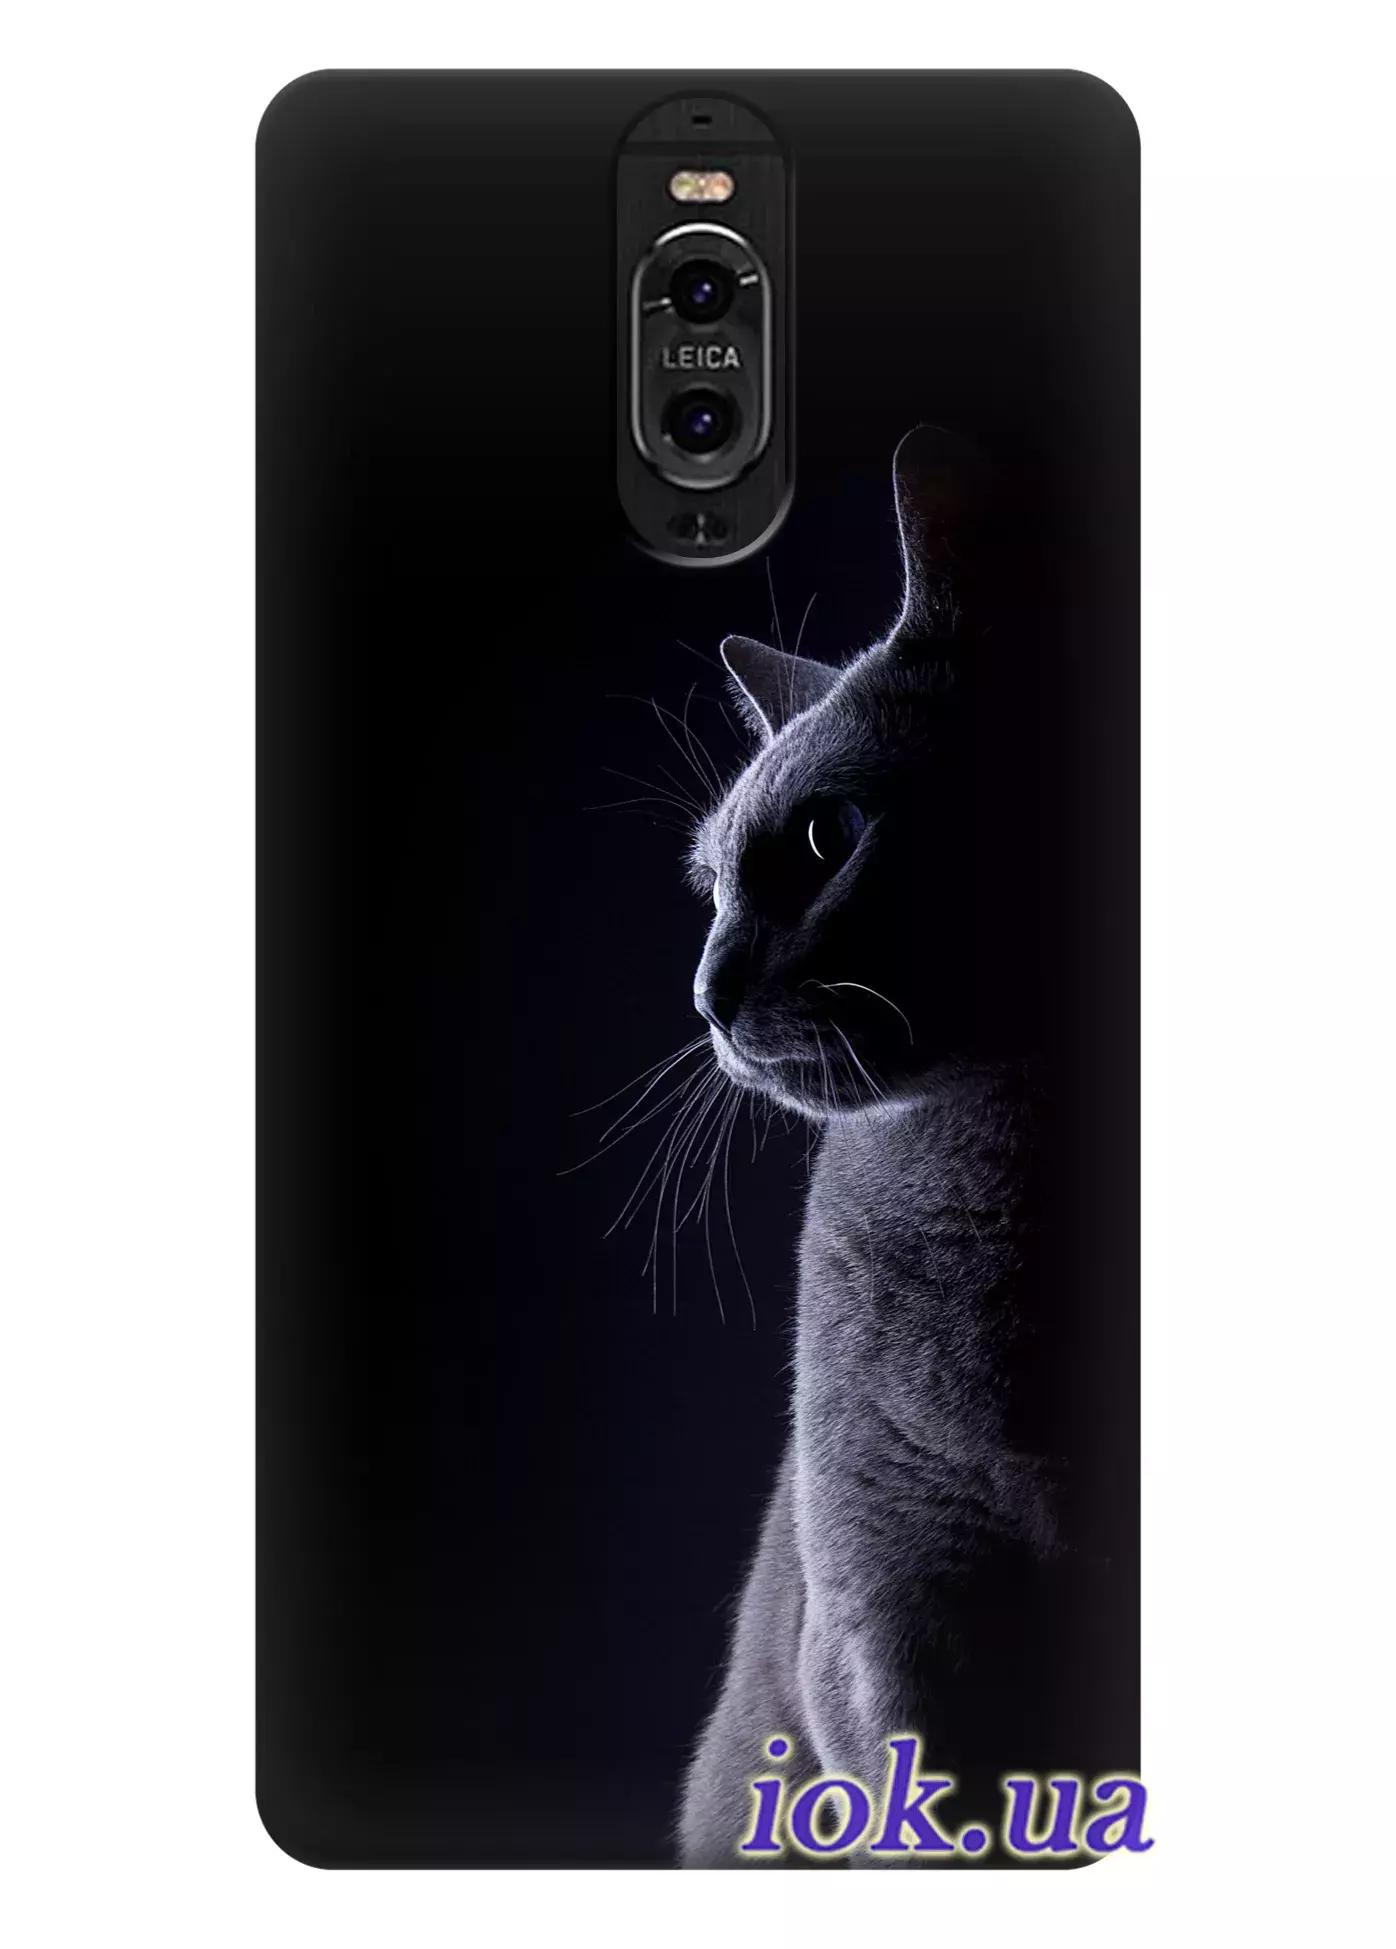 Чехол для Huawei Mate 9 Porsche - Силуэт кота